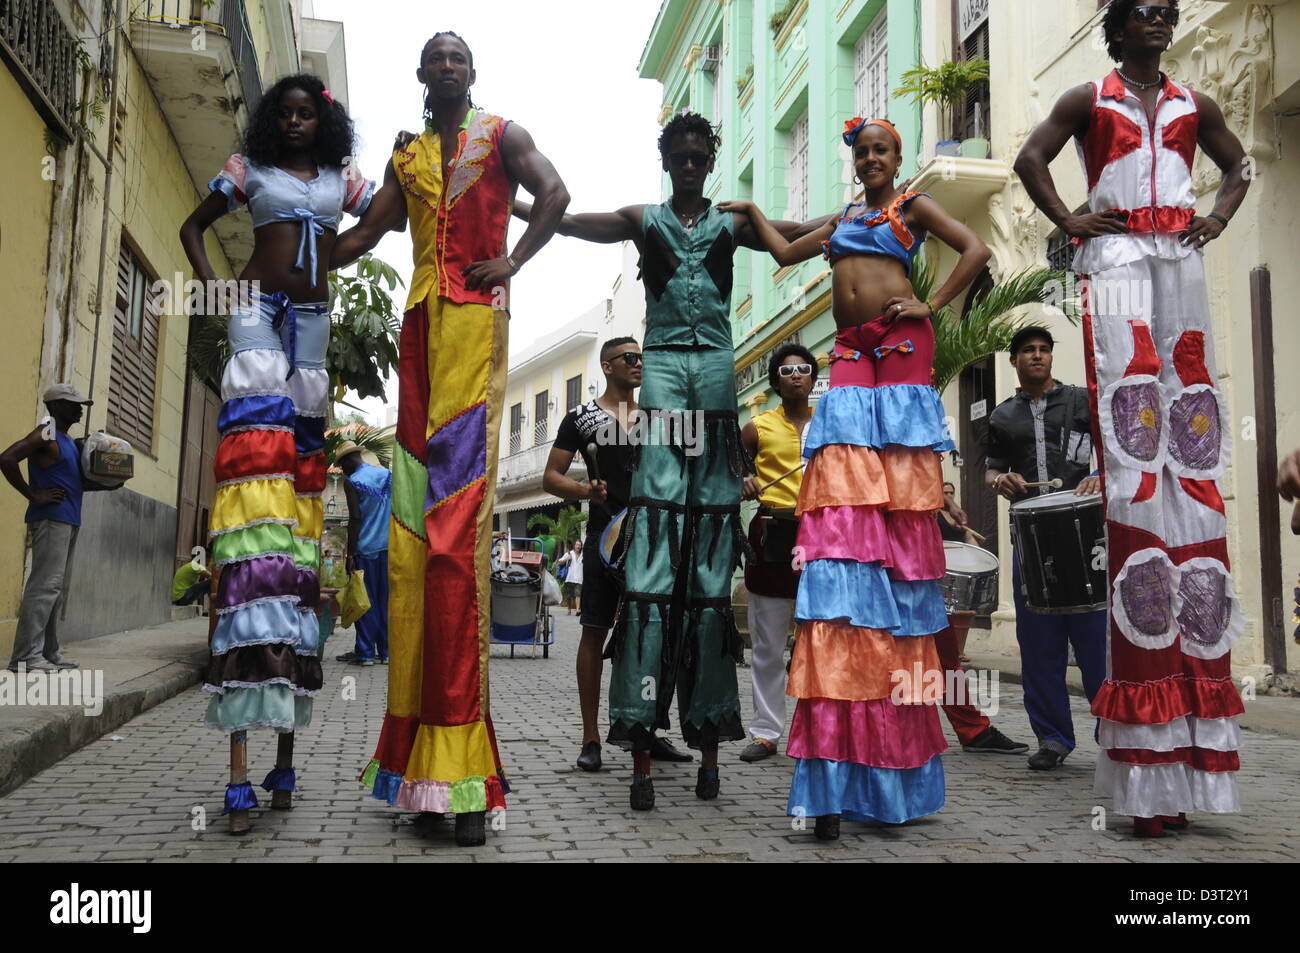 Street performers on stilts, Old town, Havana Stock Photo